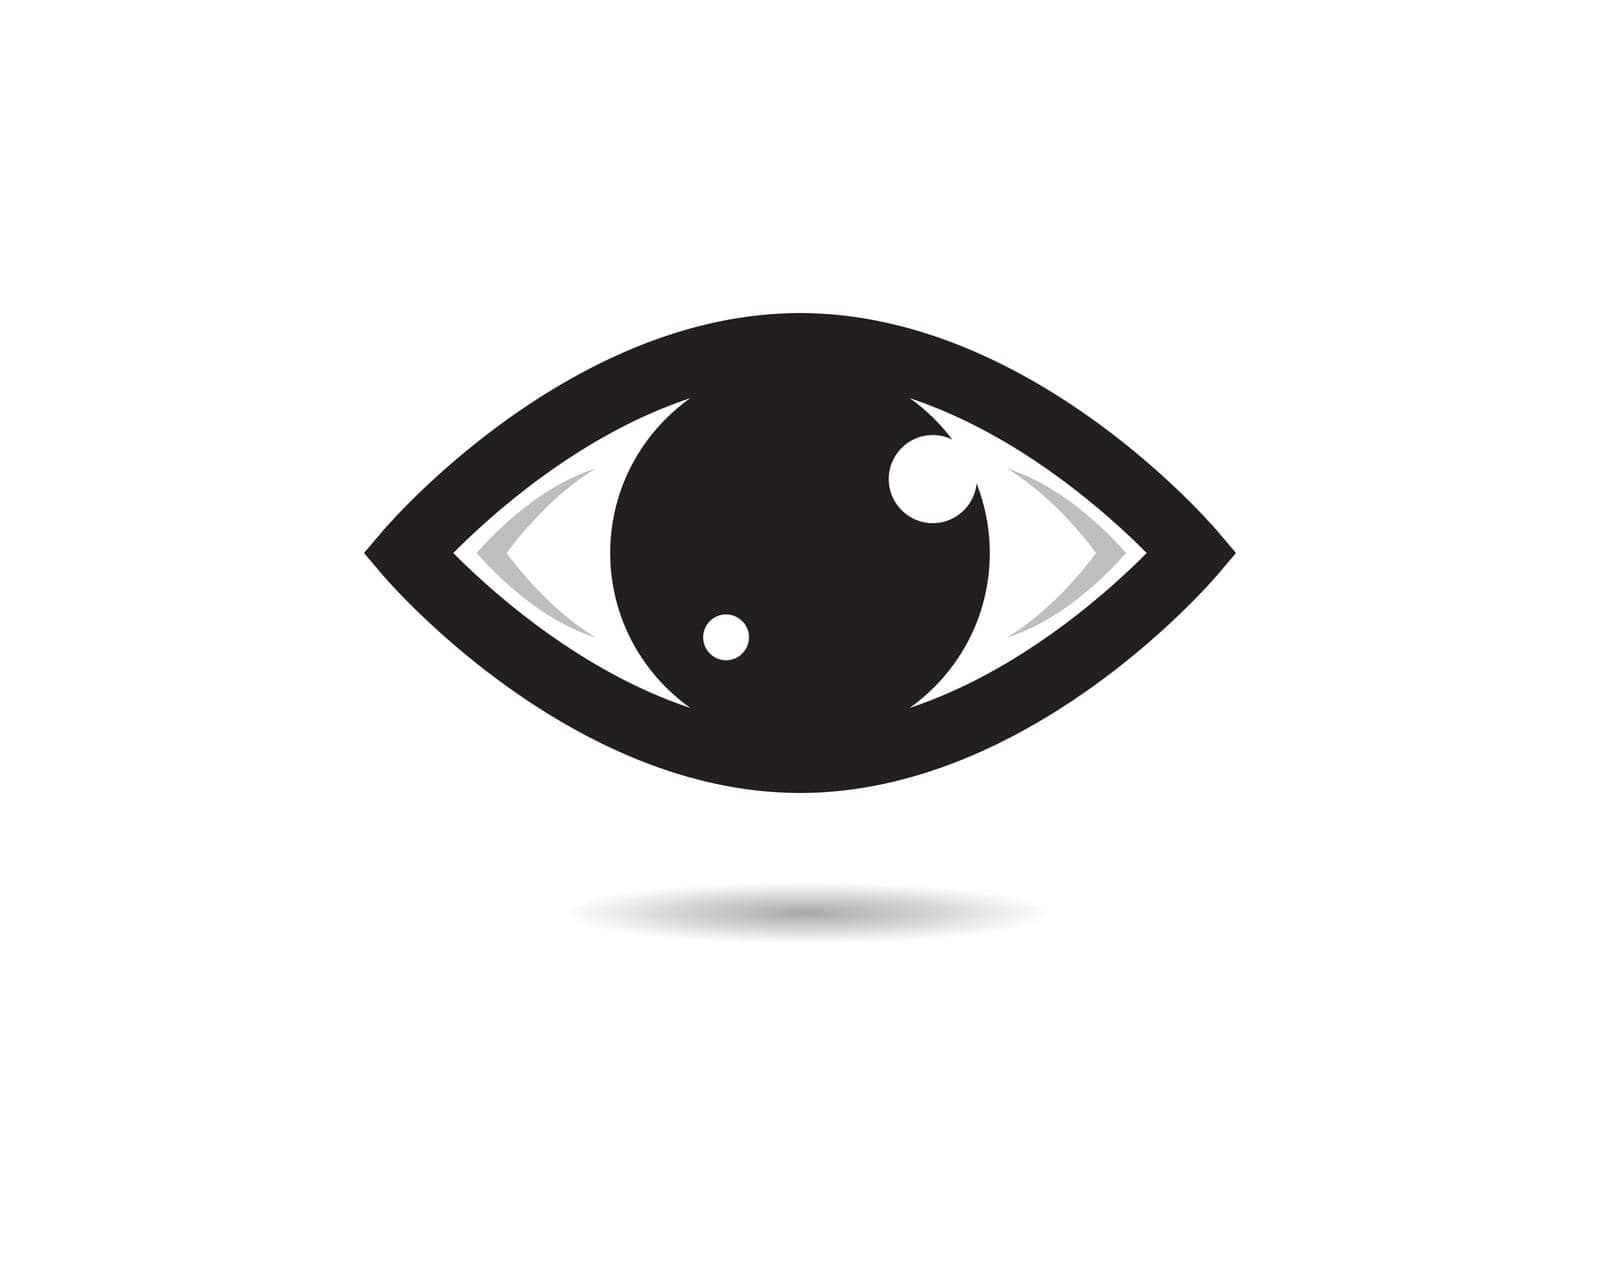 Eye symbol vector illustration design by Fat17